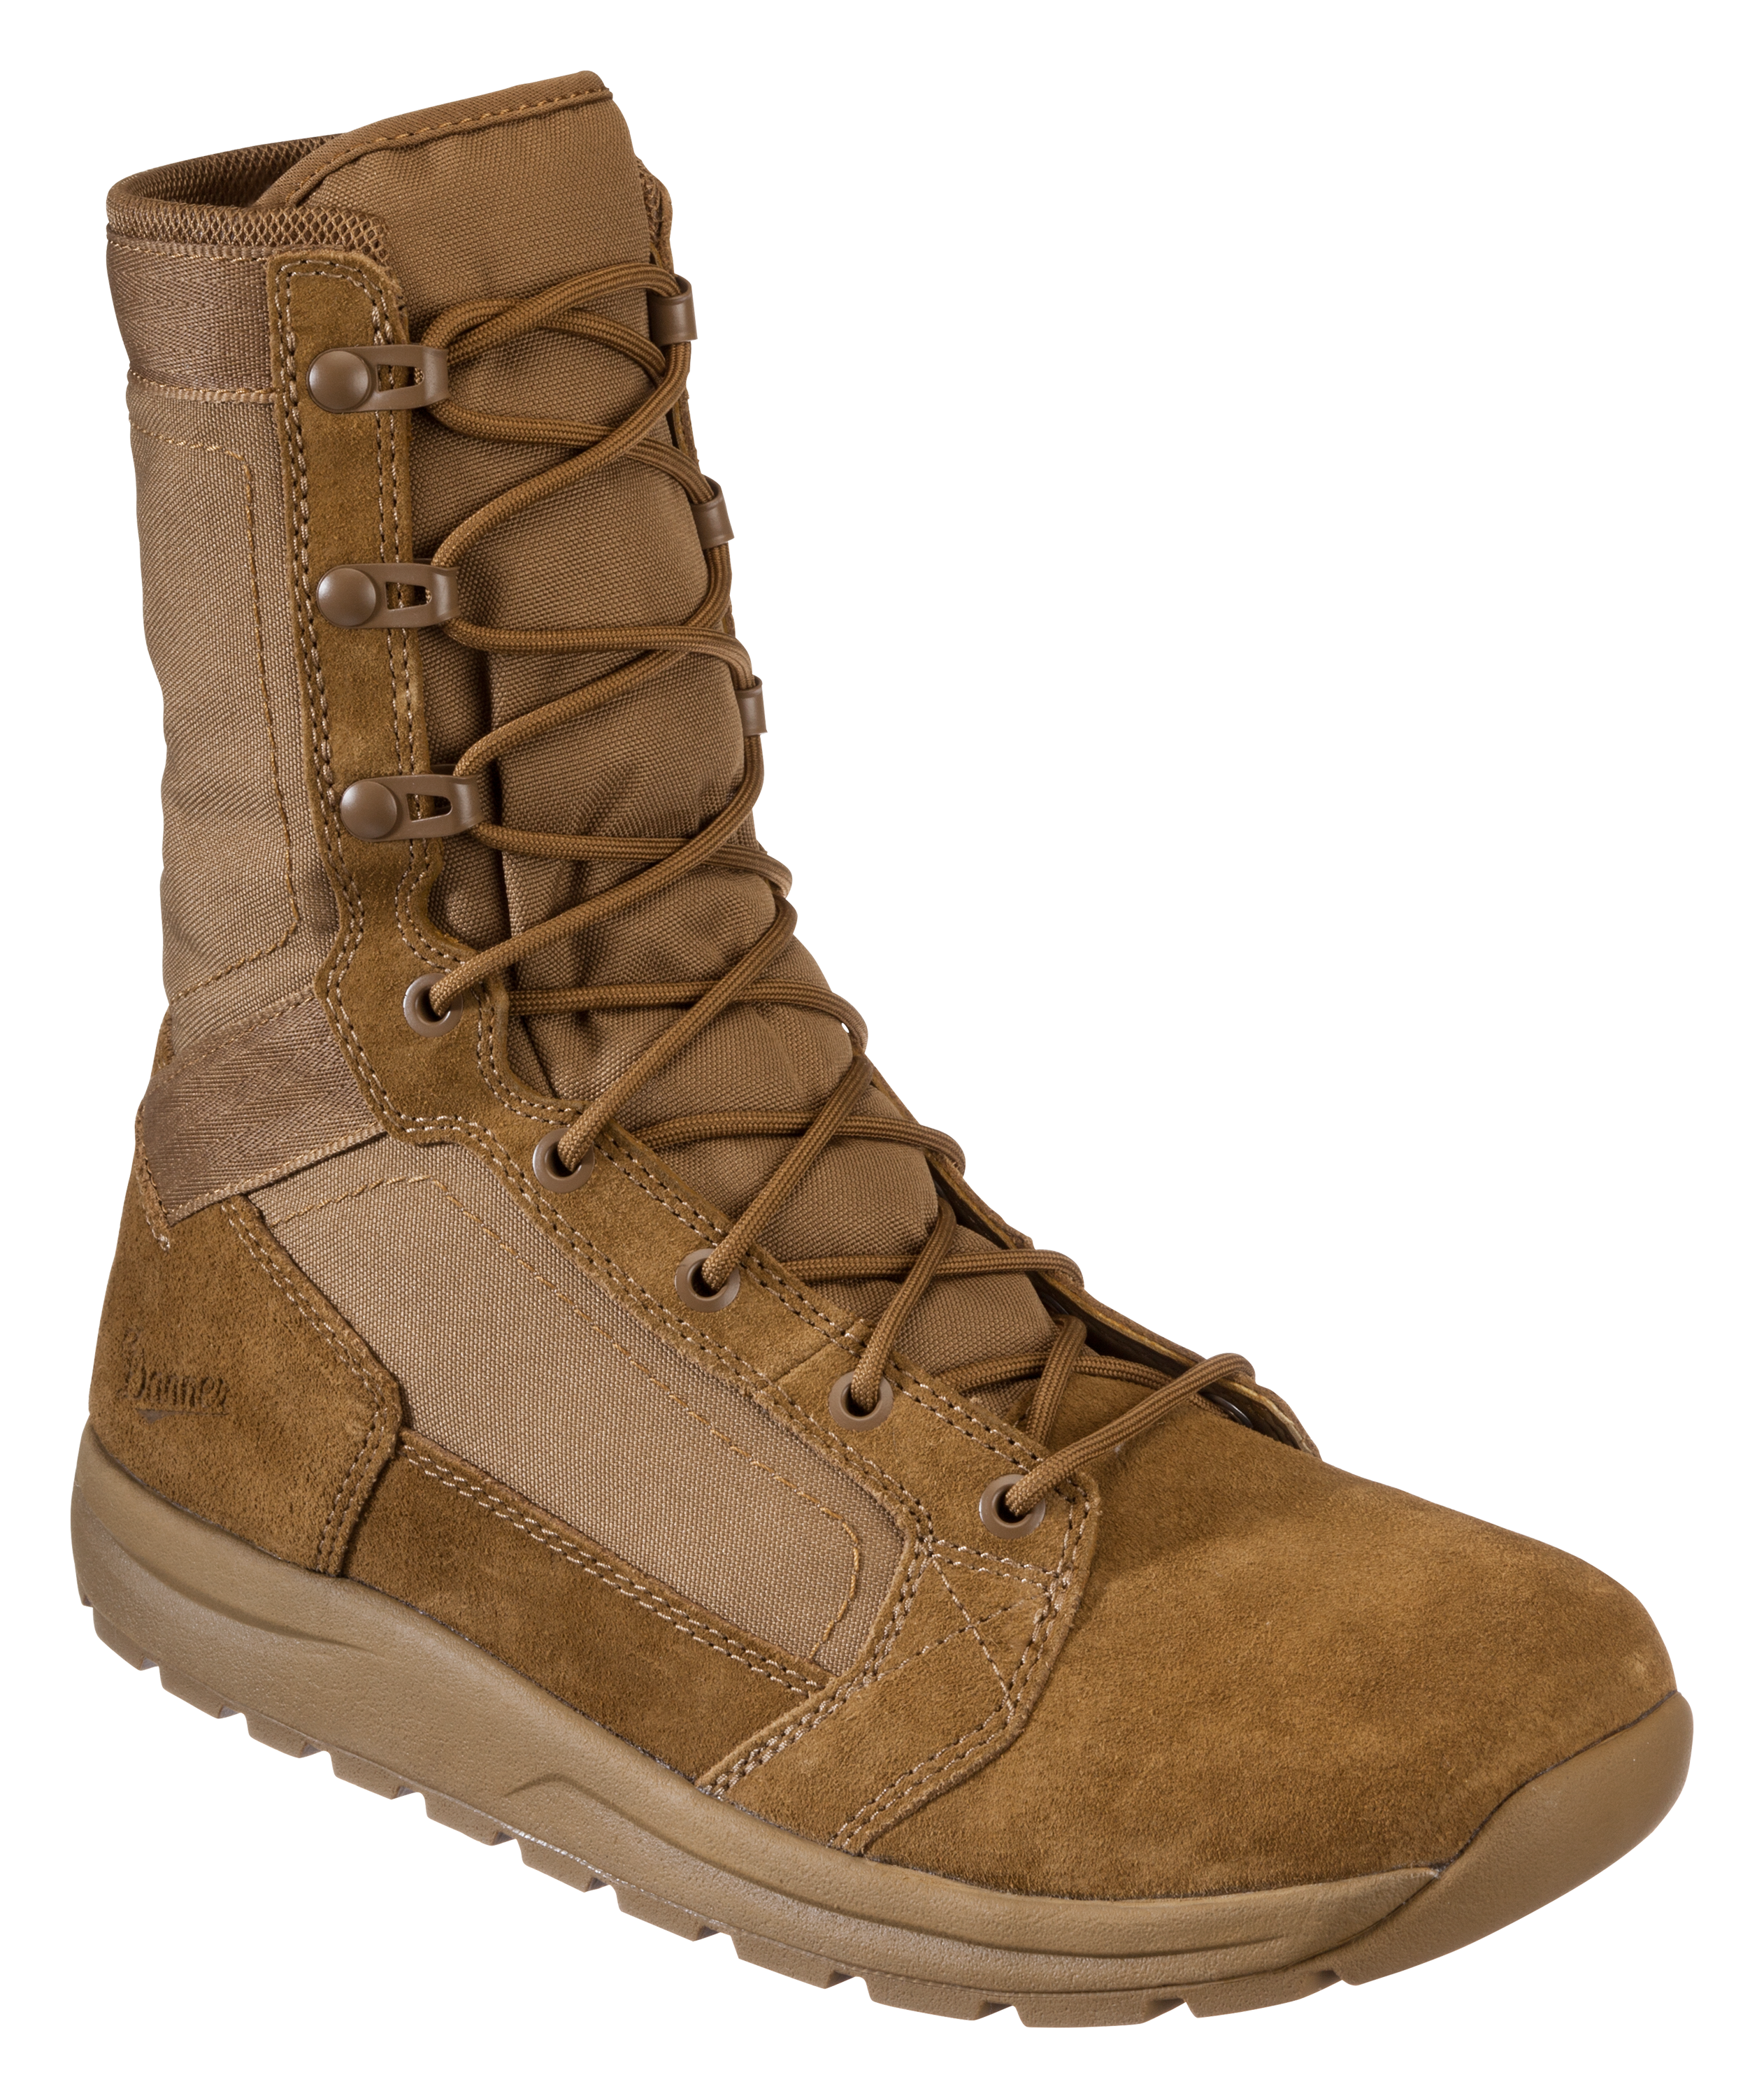 Danner Tachyon Tactical Boots for Men - Coyote - 10W